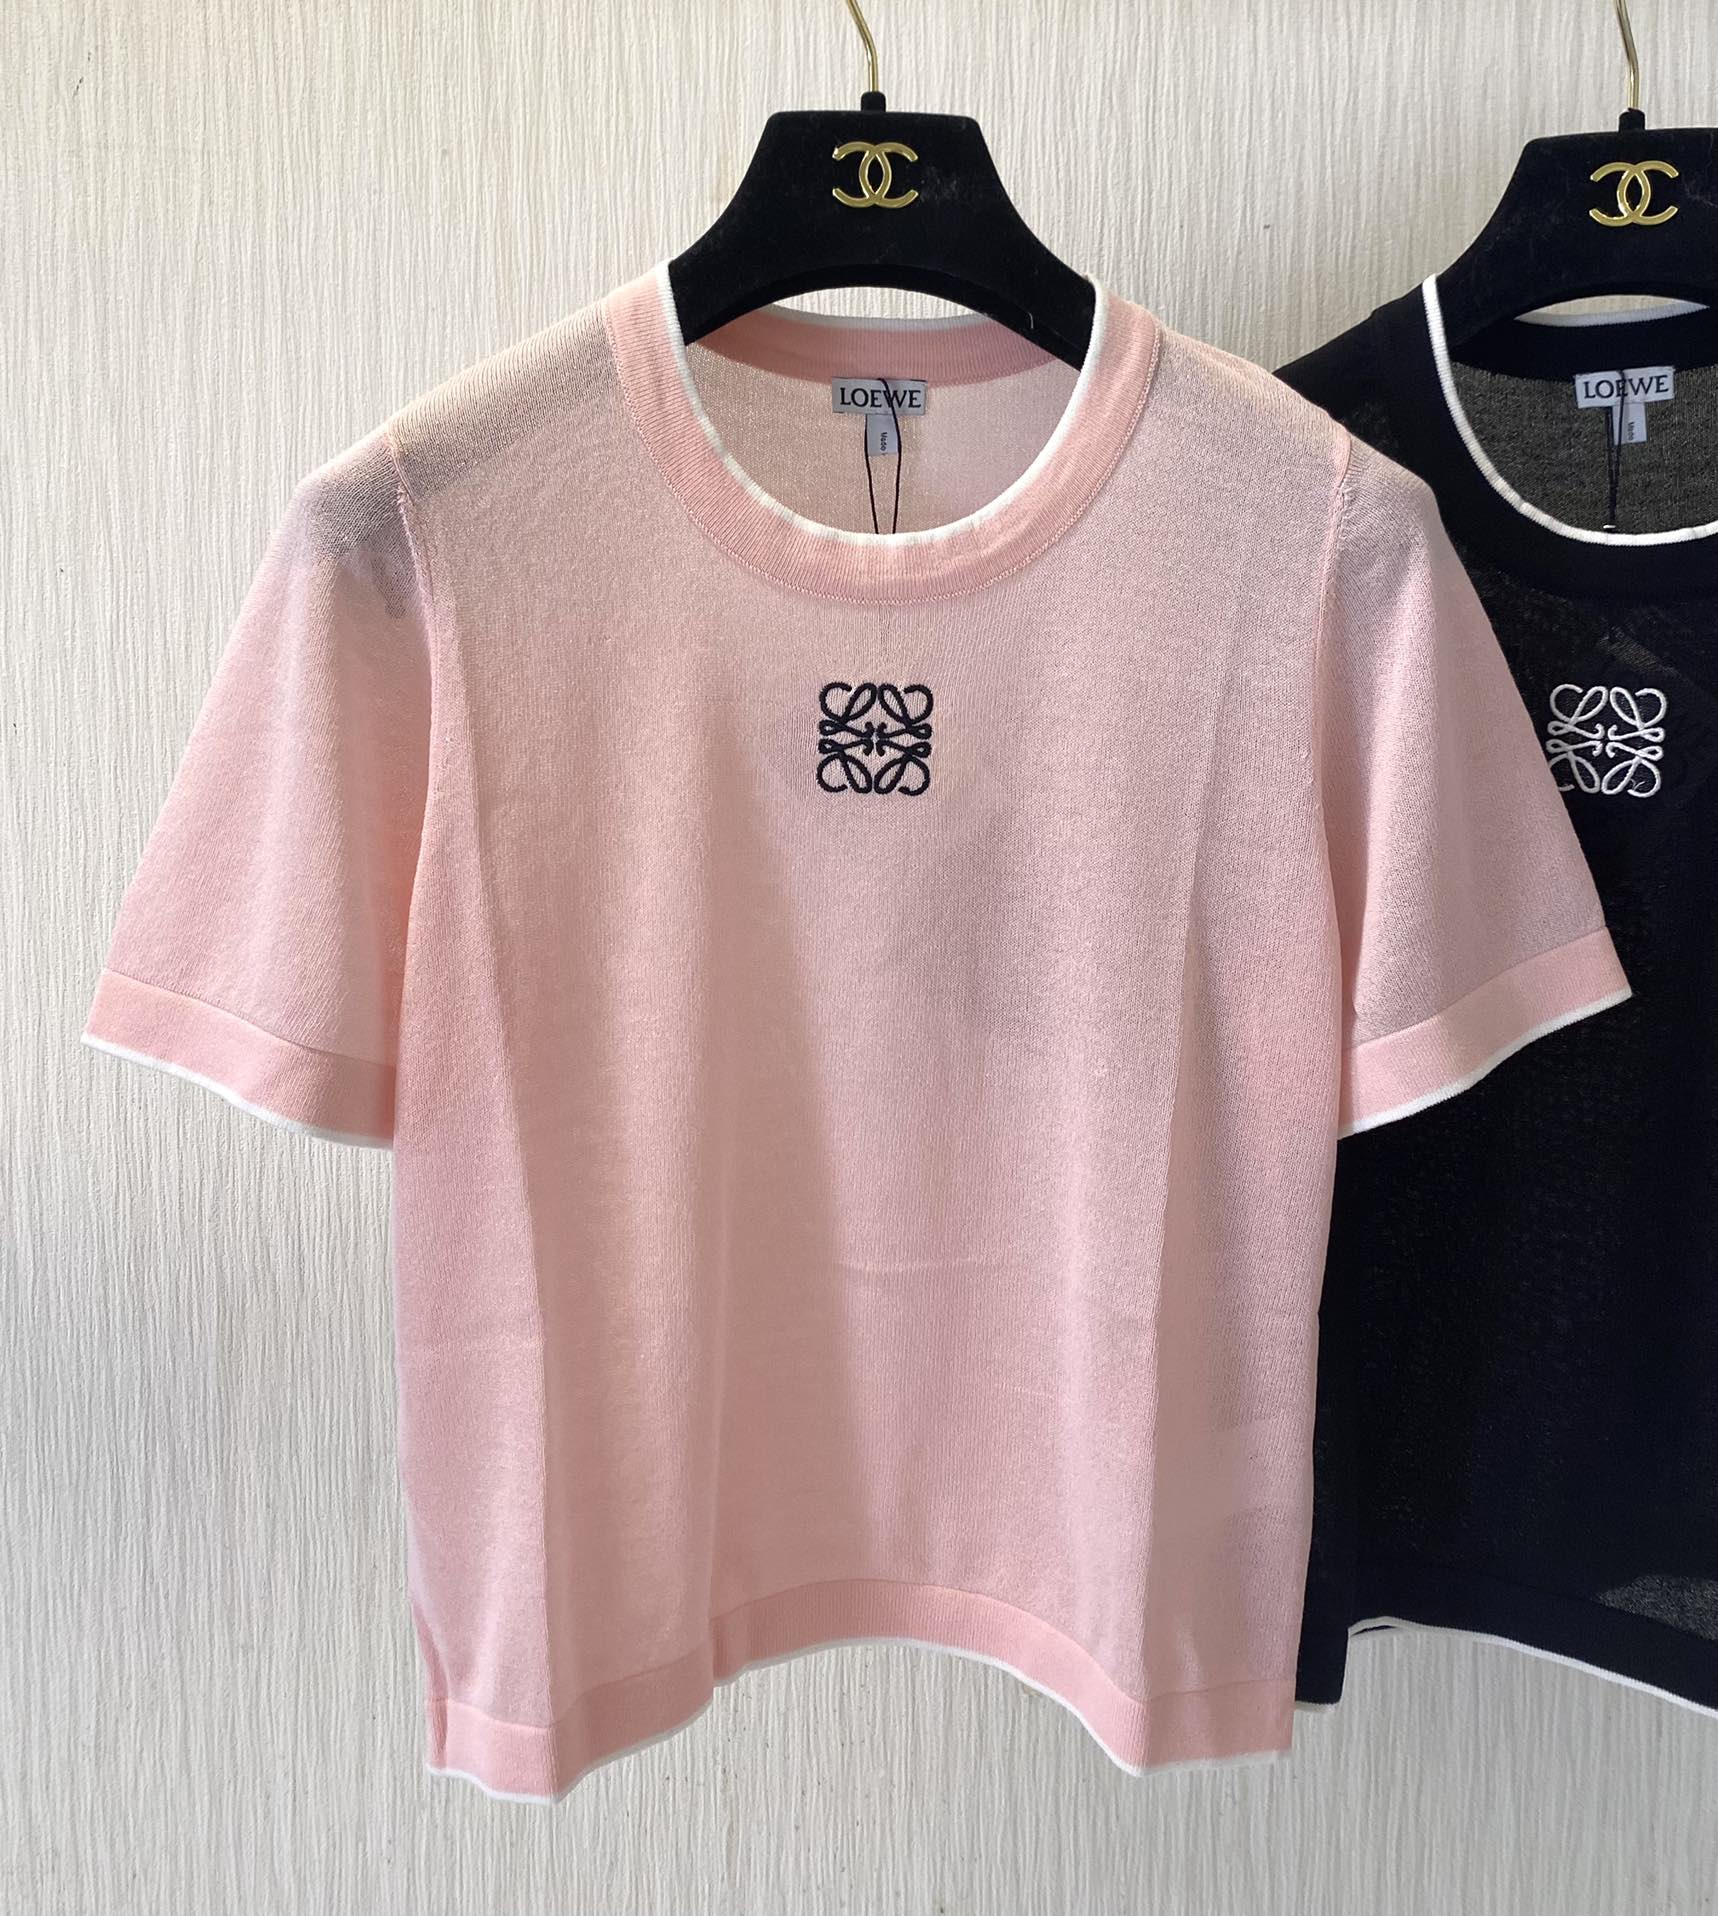 Loewe Top
 Clothing T-Shirt Knitting Spring Collection Short Sleeve